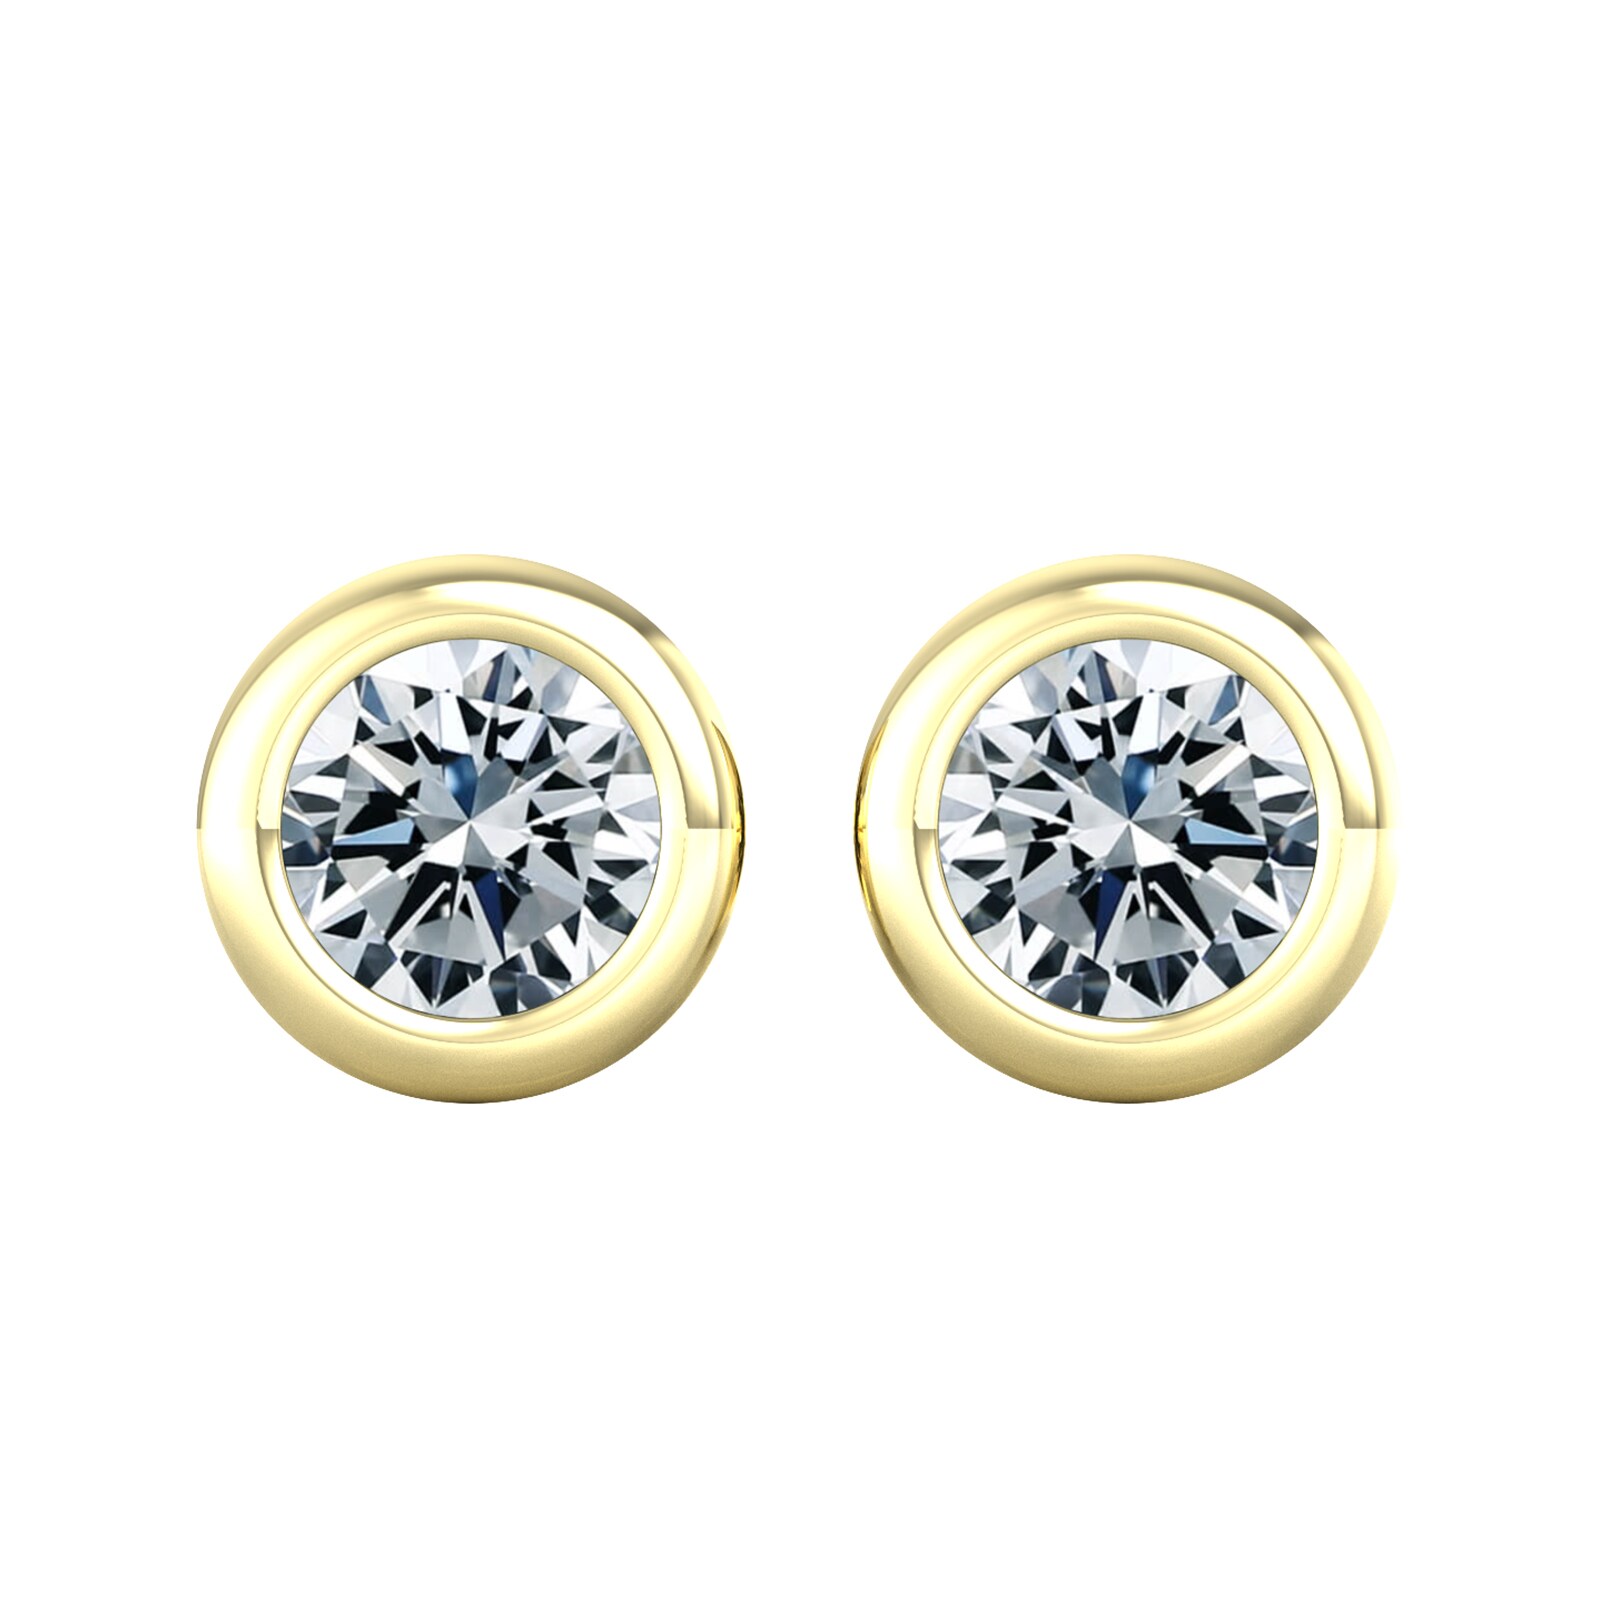 18ct yellow gold 0.75ct diamond stud earrings